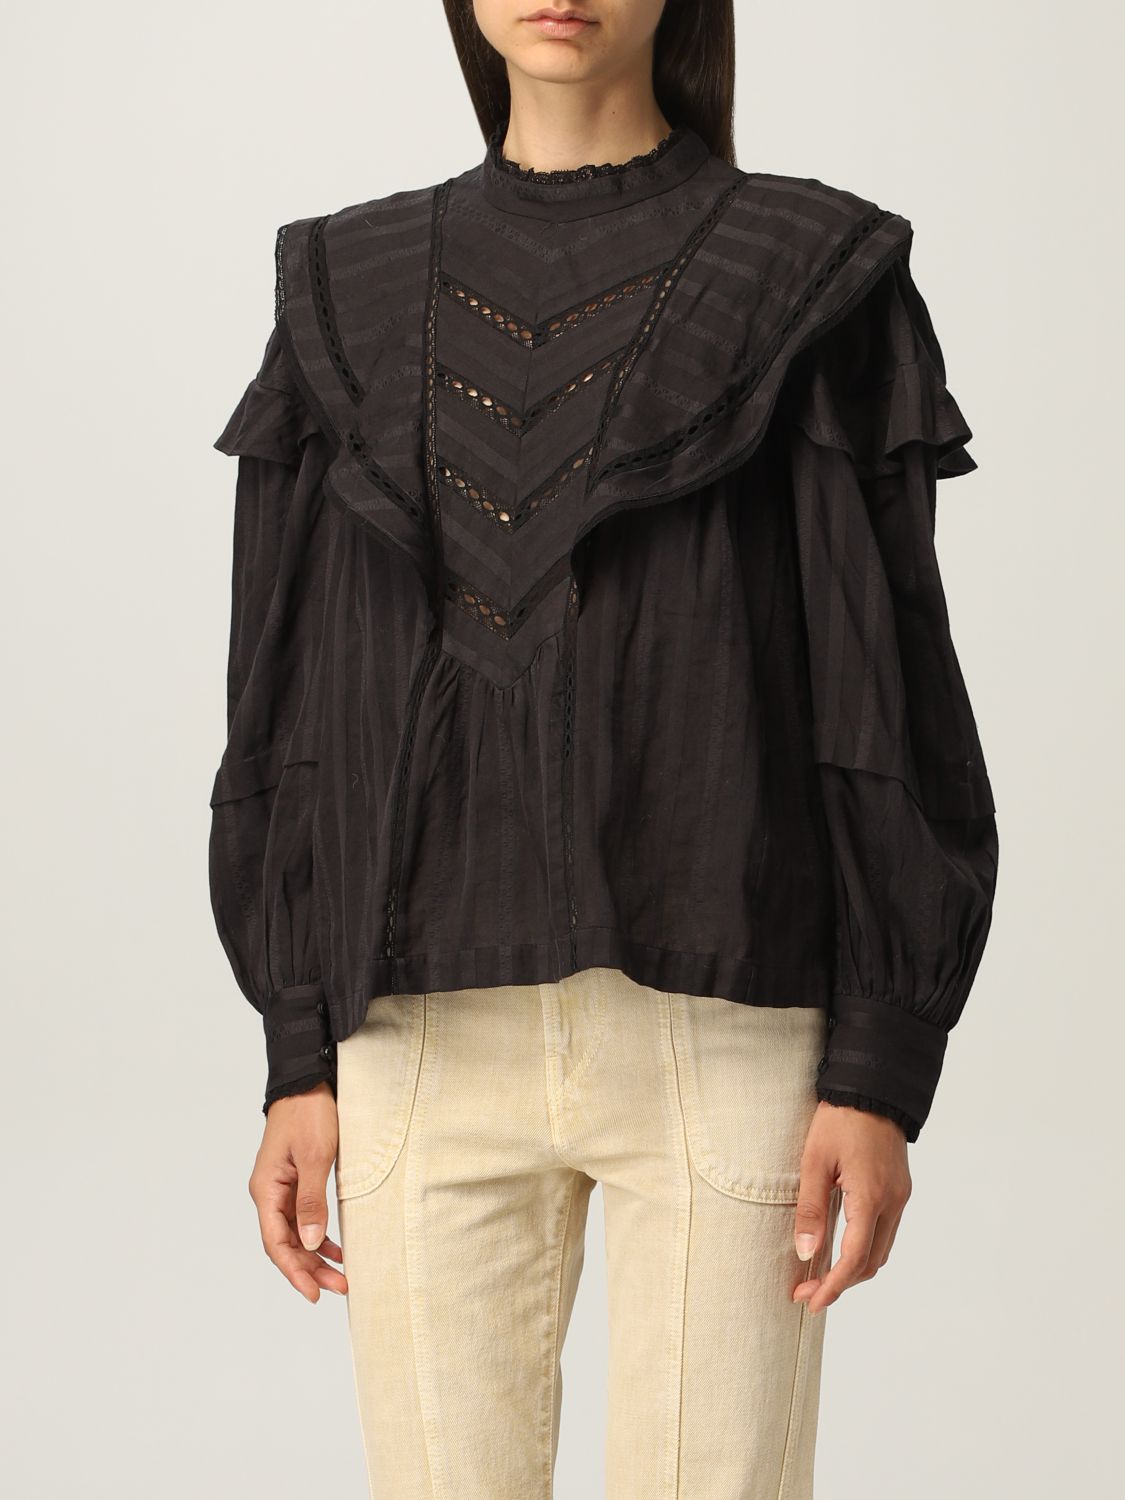 ISABEL MARANT ETOILE: cotton blouse with ruffles | Top Marant Etoile Women Black | Top Marant Etoile HT182921A025E